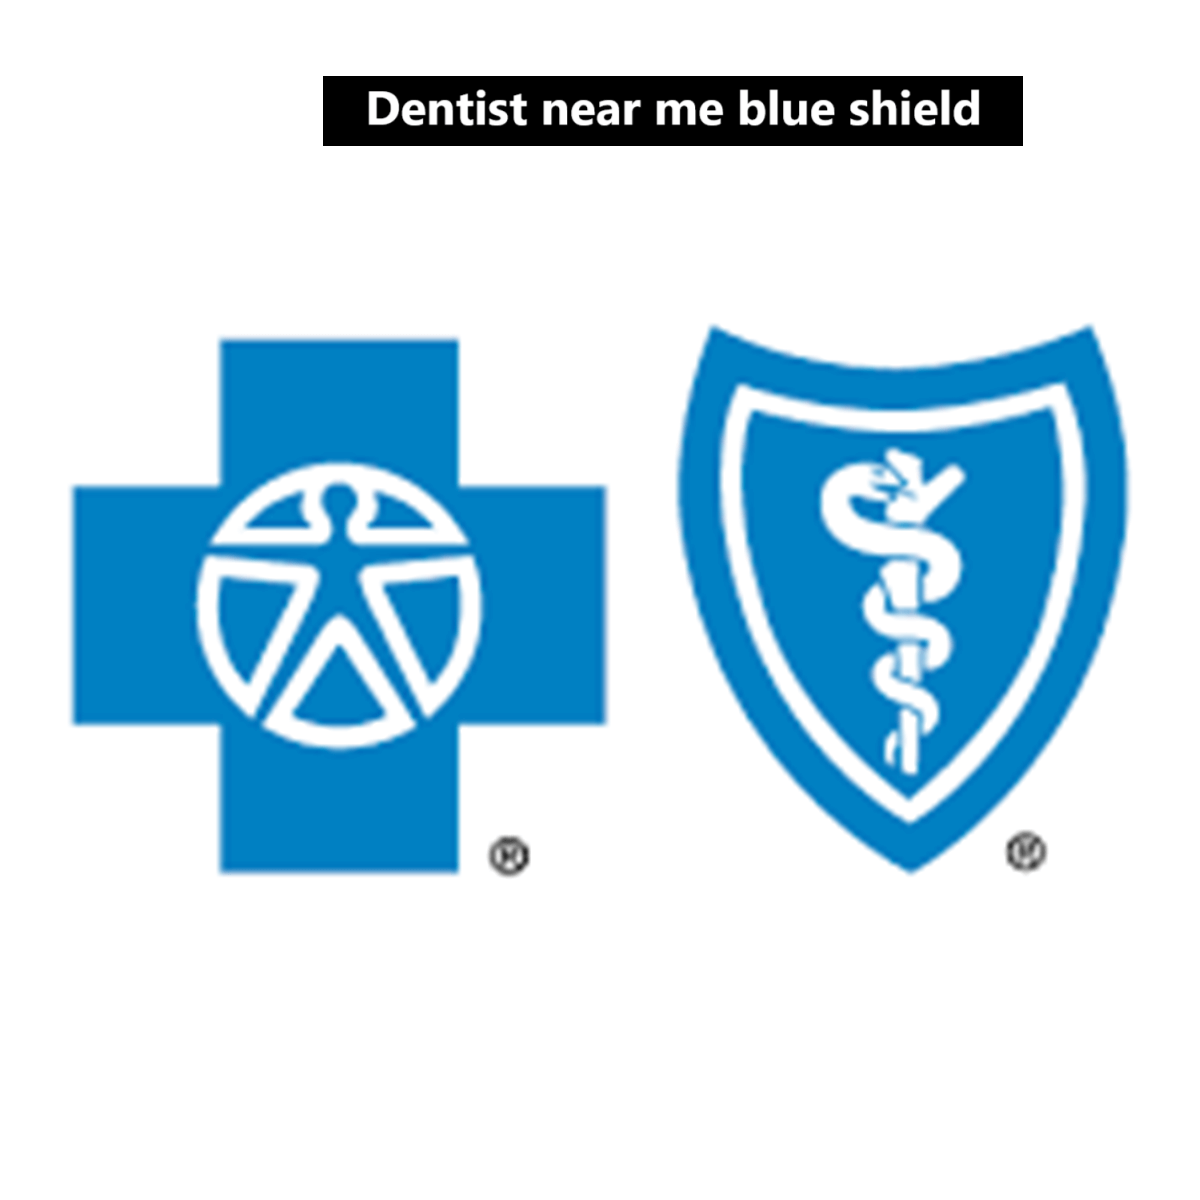 Dentist near me blue shield